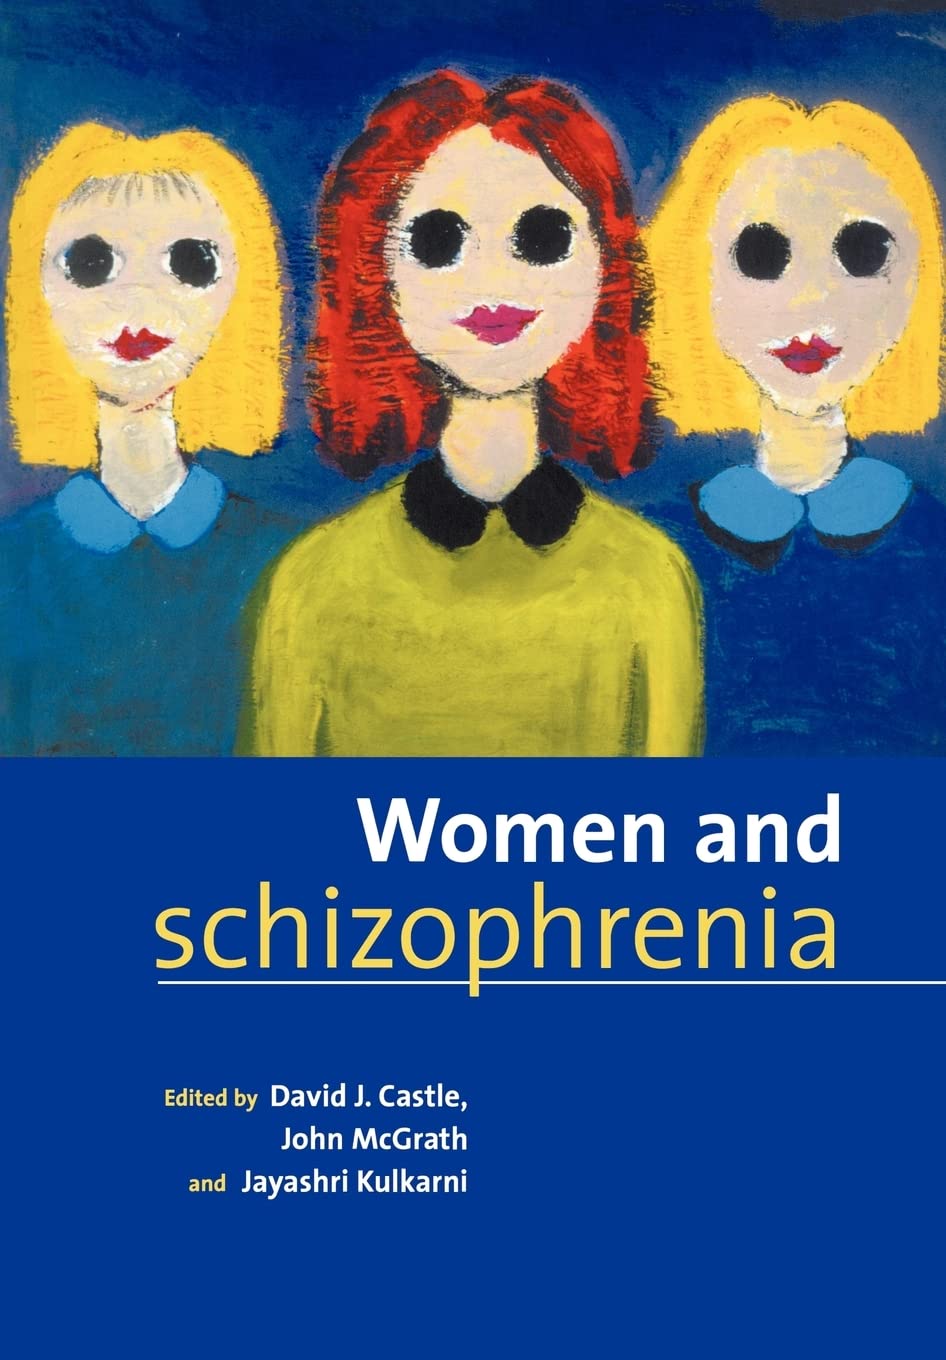 books about schizophrenia15